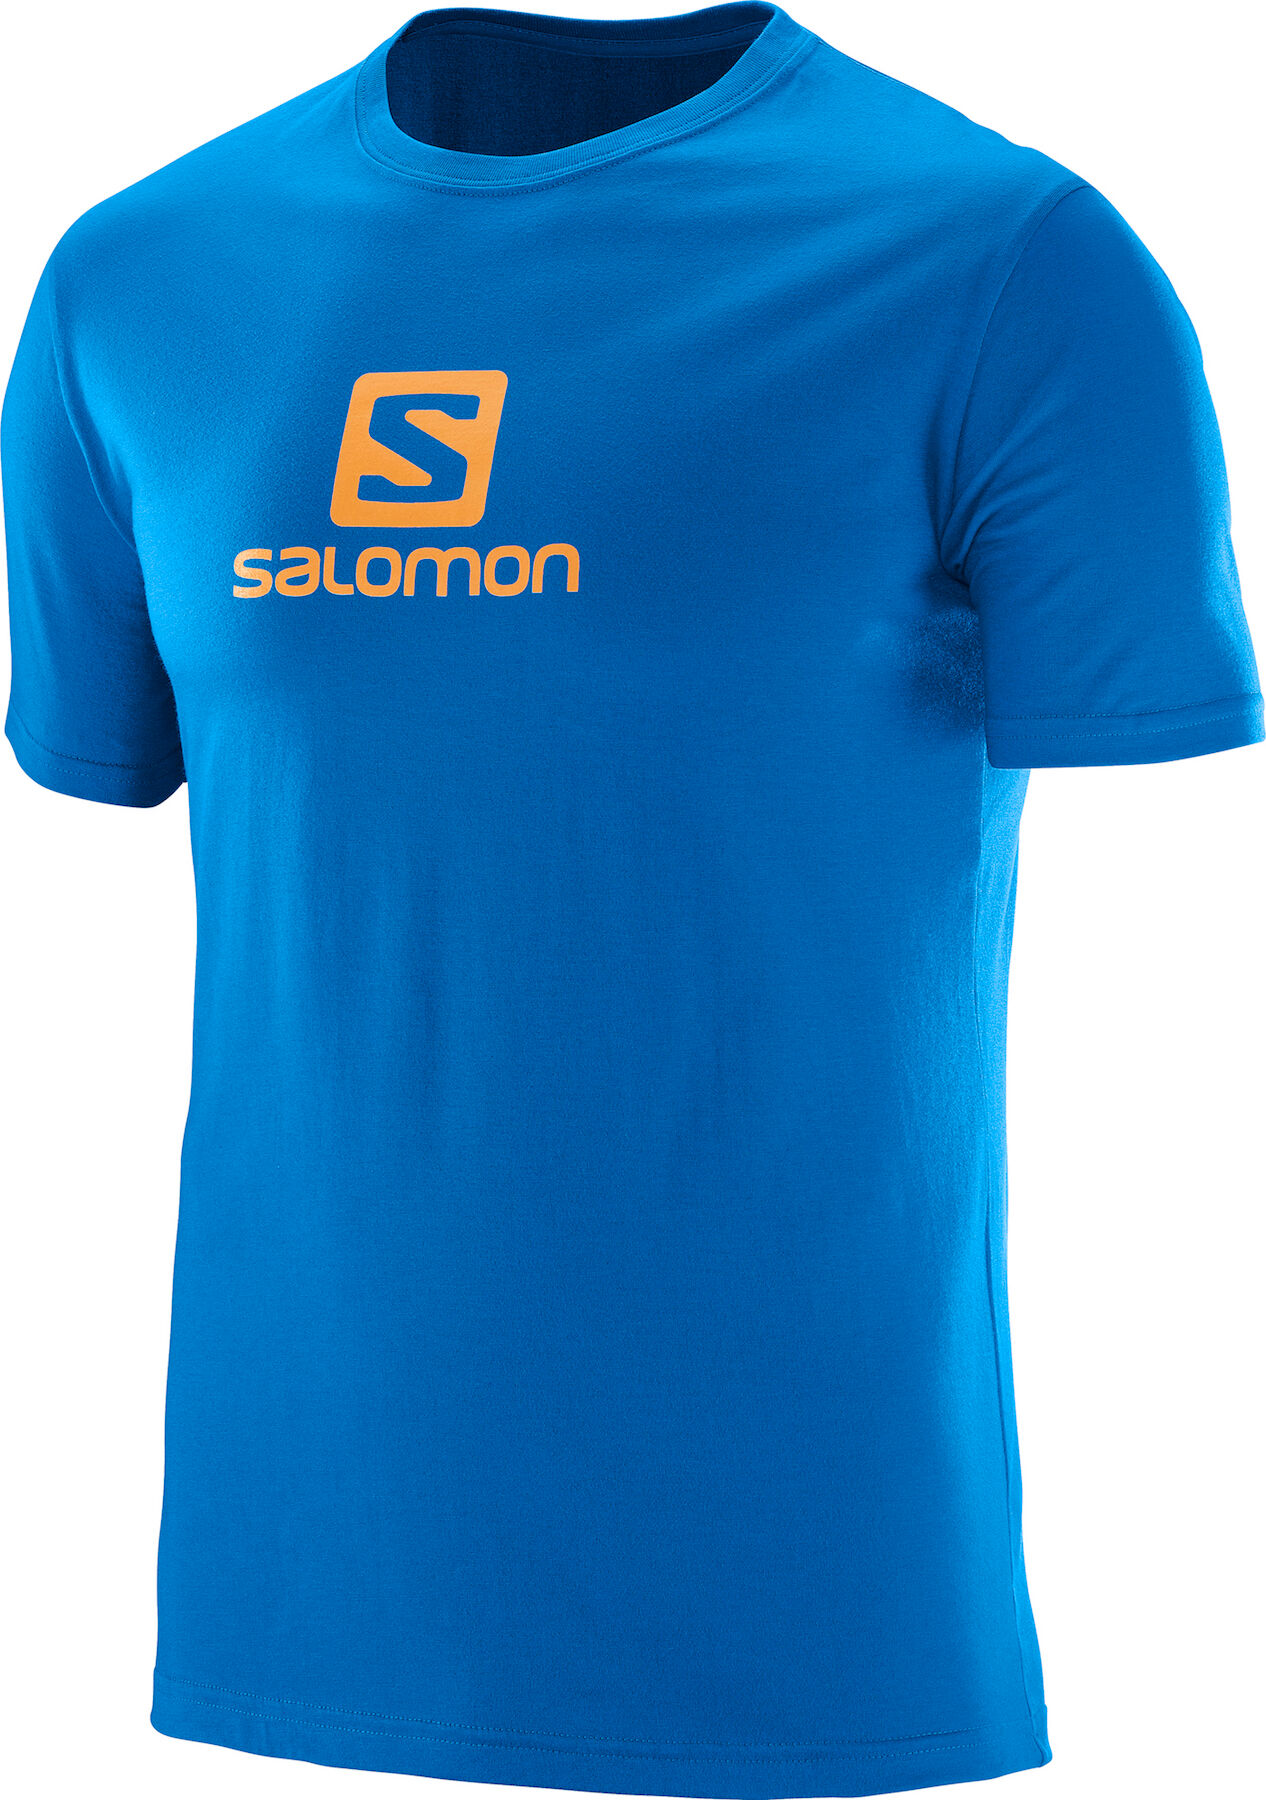 Salomon - Coton Logo SS TEE M - T-shirt - Men's